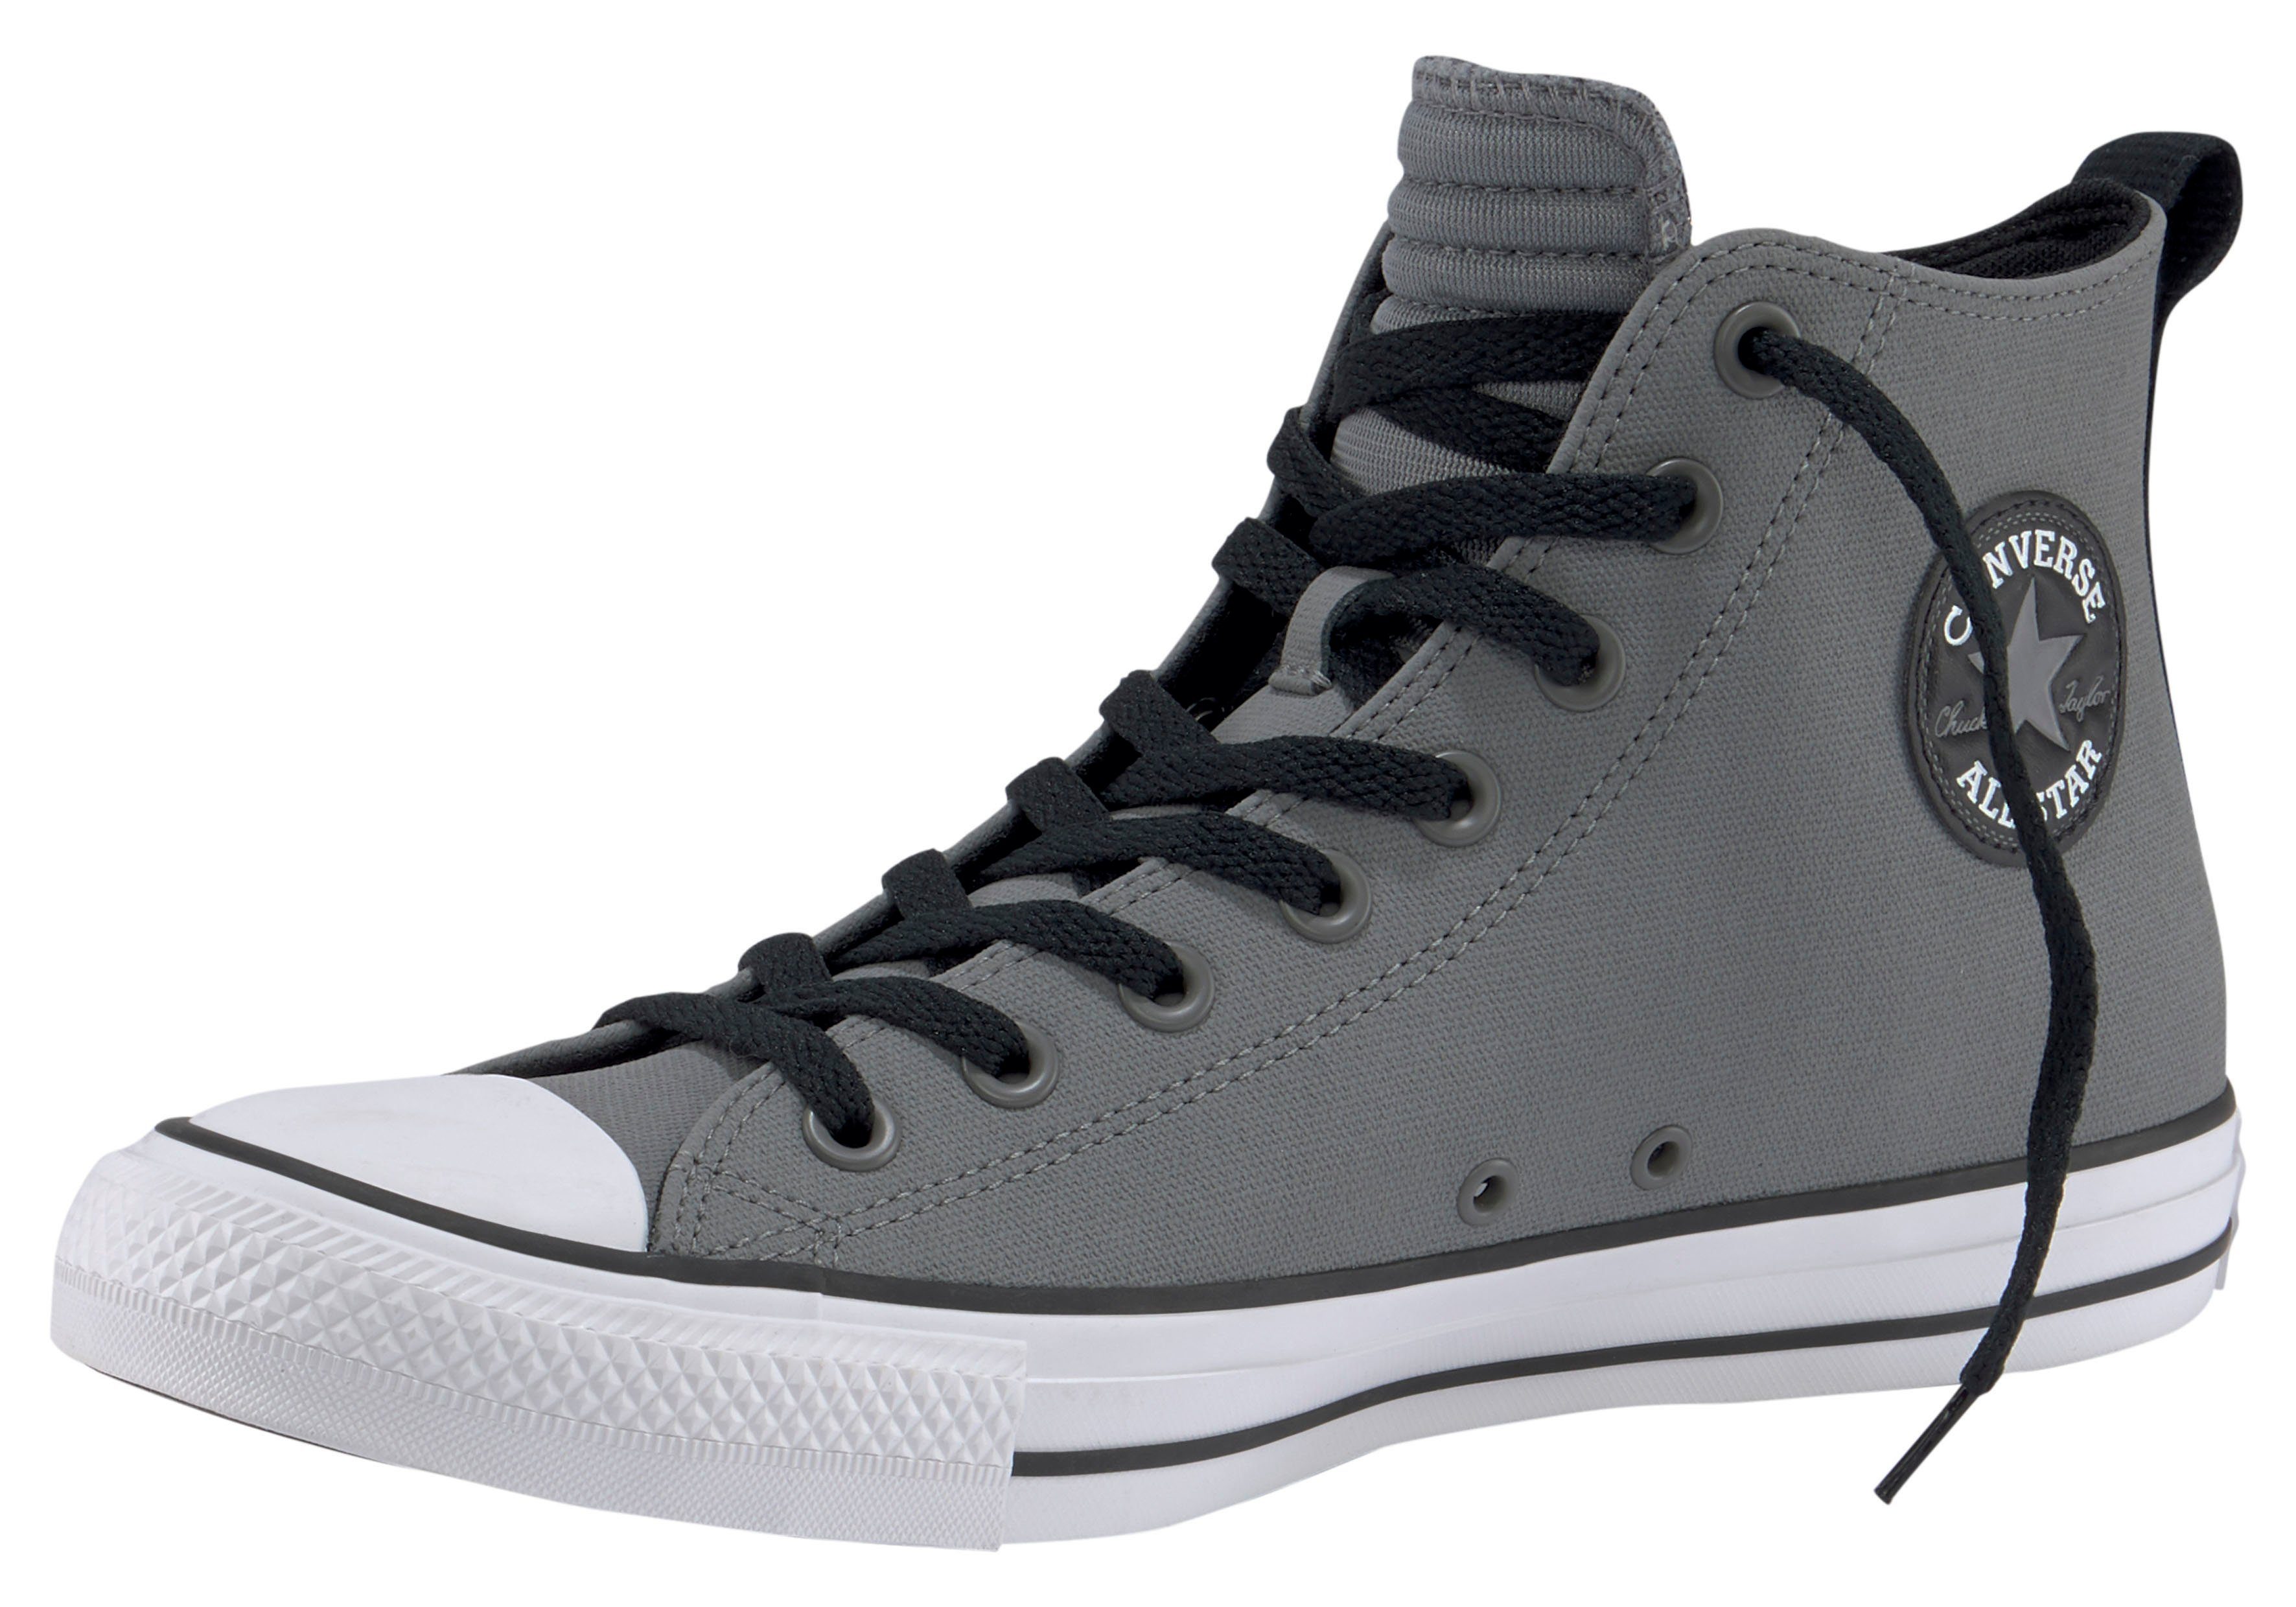 Converse »Chuck Taylor All Star HI« Sneaker kaufen | OTTO